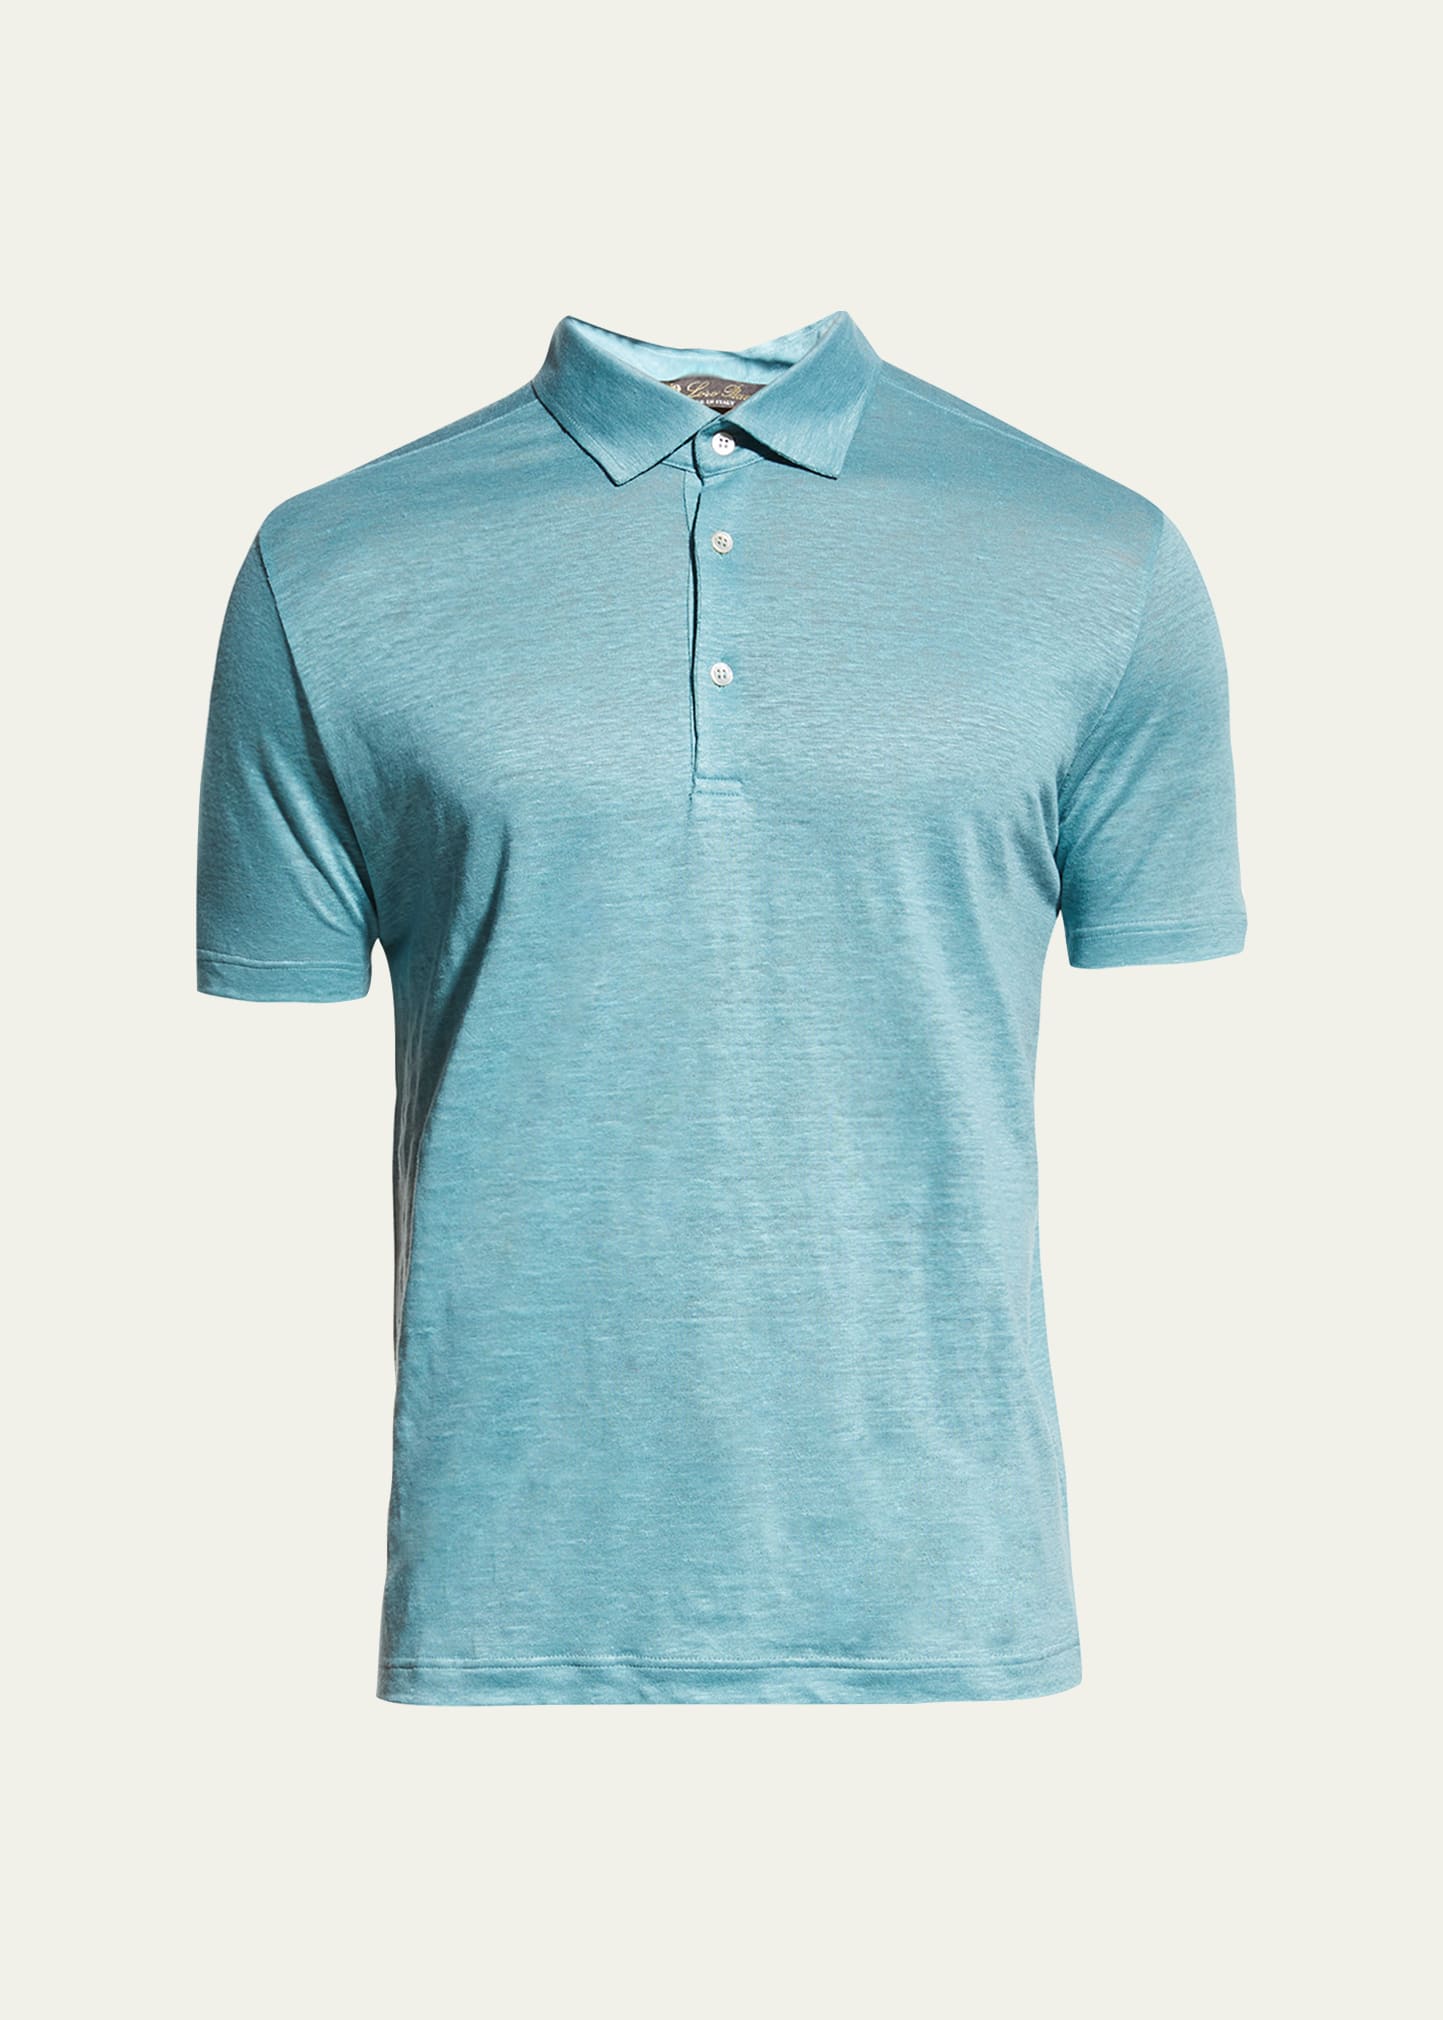 Men's Linen Jersey Dublon Polo Shirt